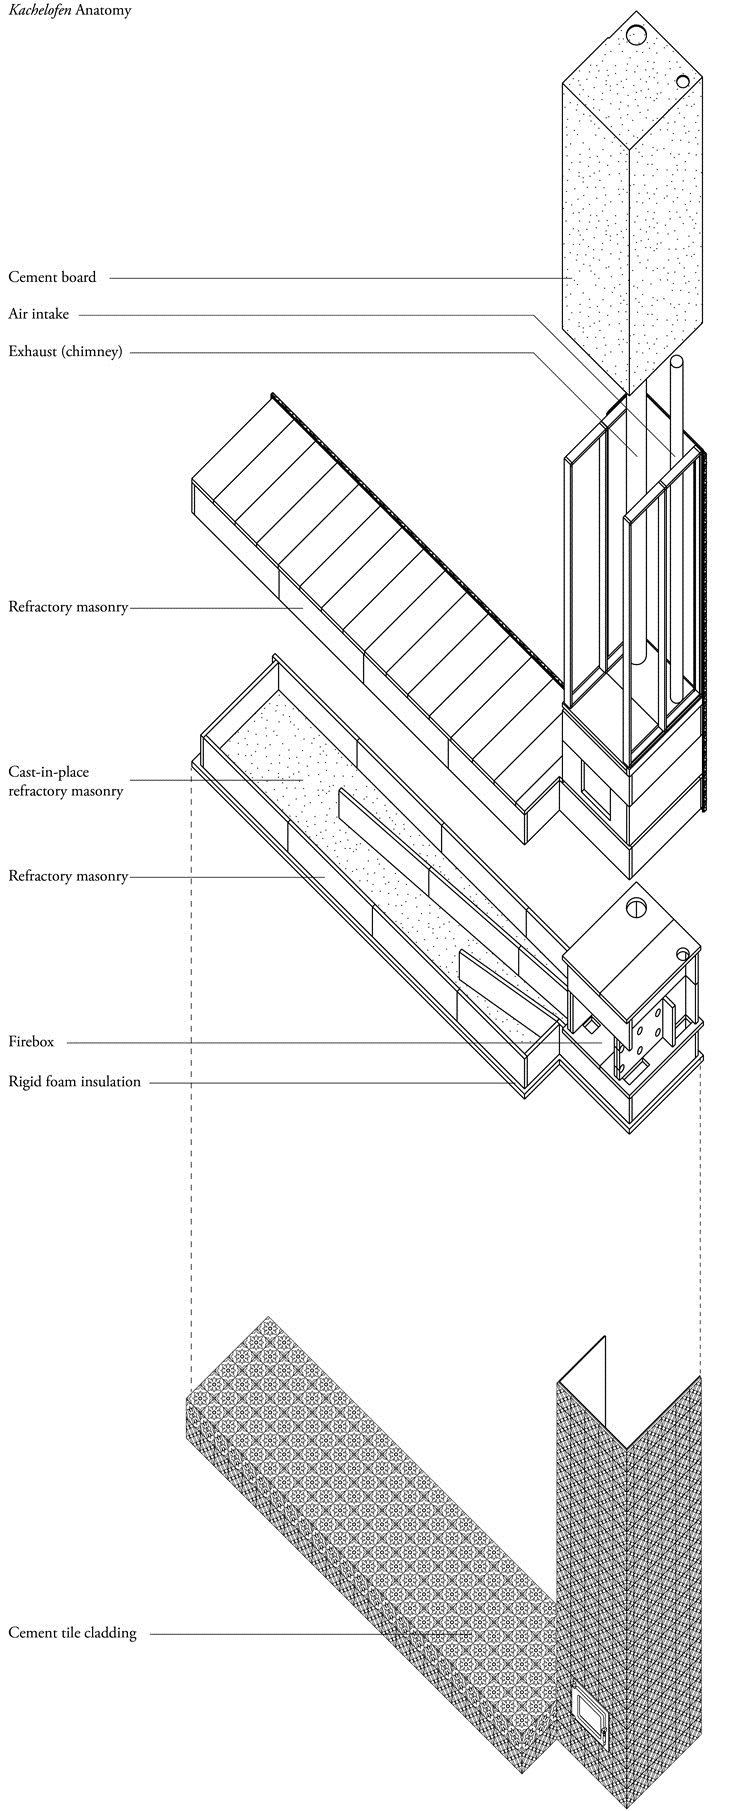 Archisearch - Cafe Fargo / Davidson Rafailidis Architecture / Masonry heater anatomy